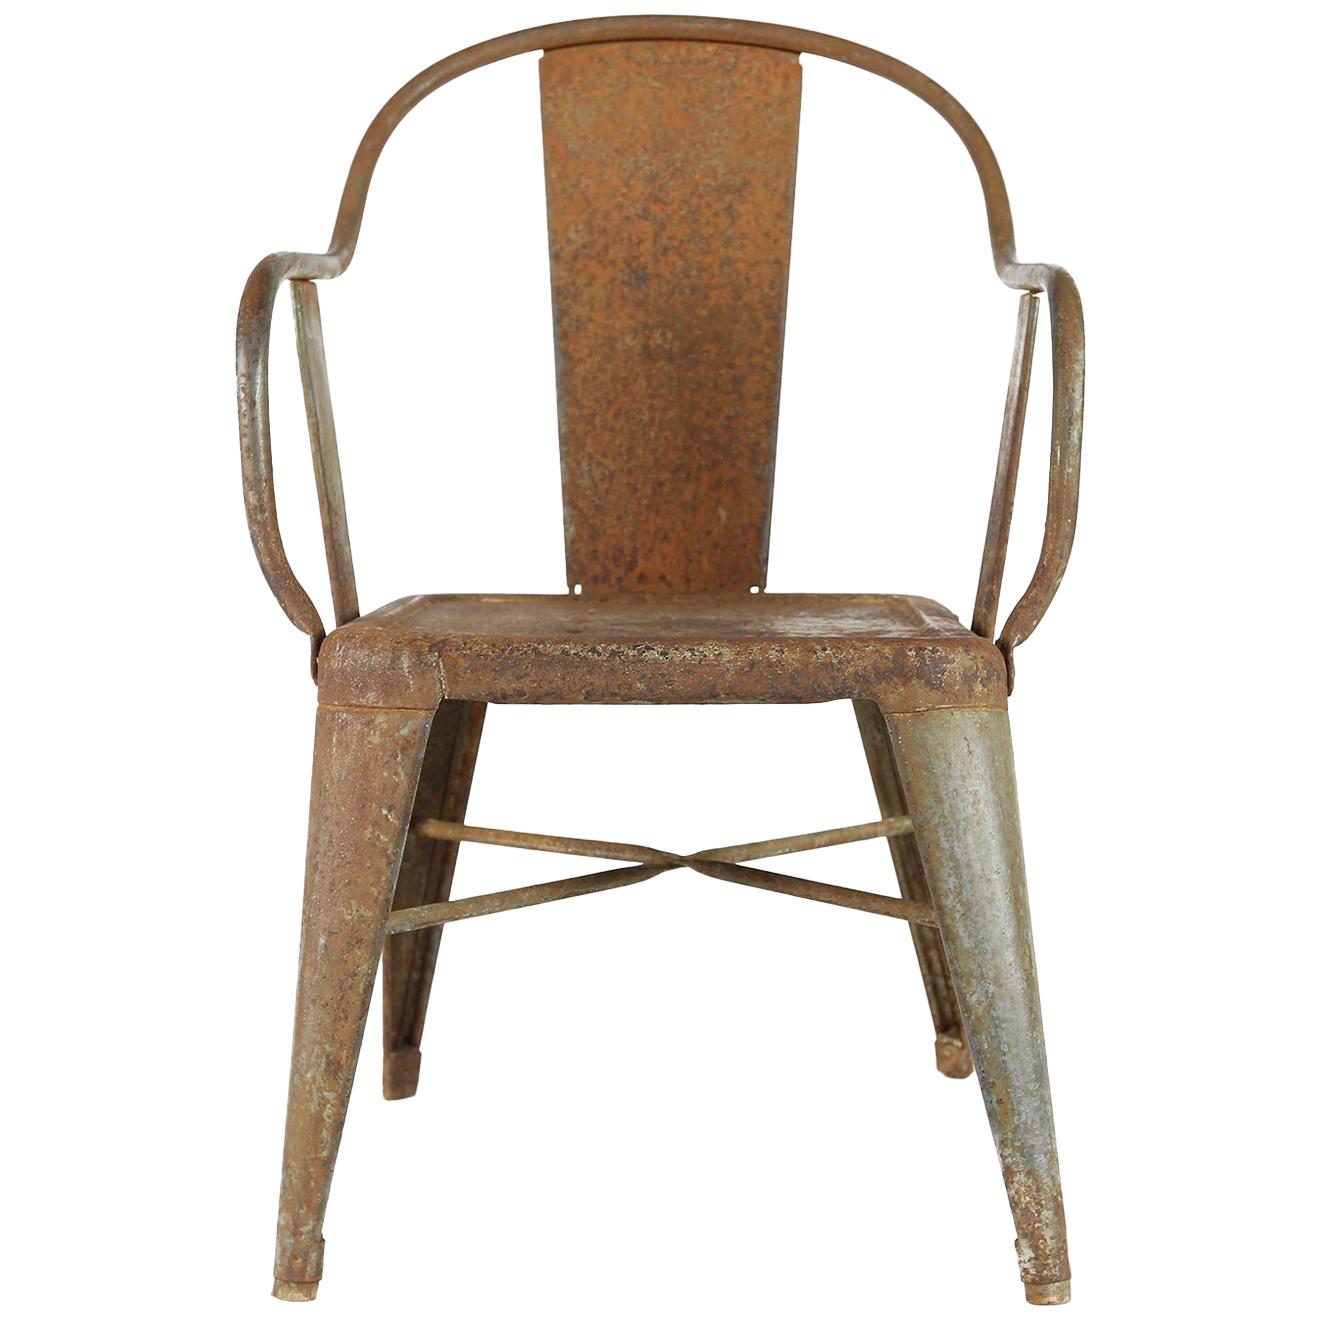 Original 1930s Tolix Kids Chair by Xavier Pauchard